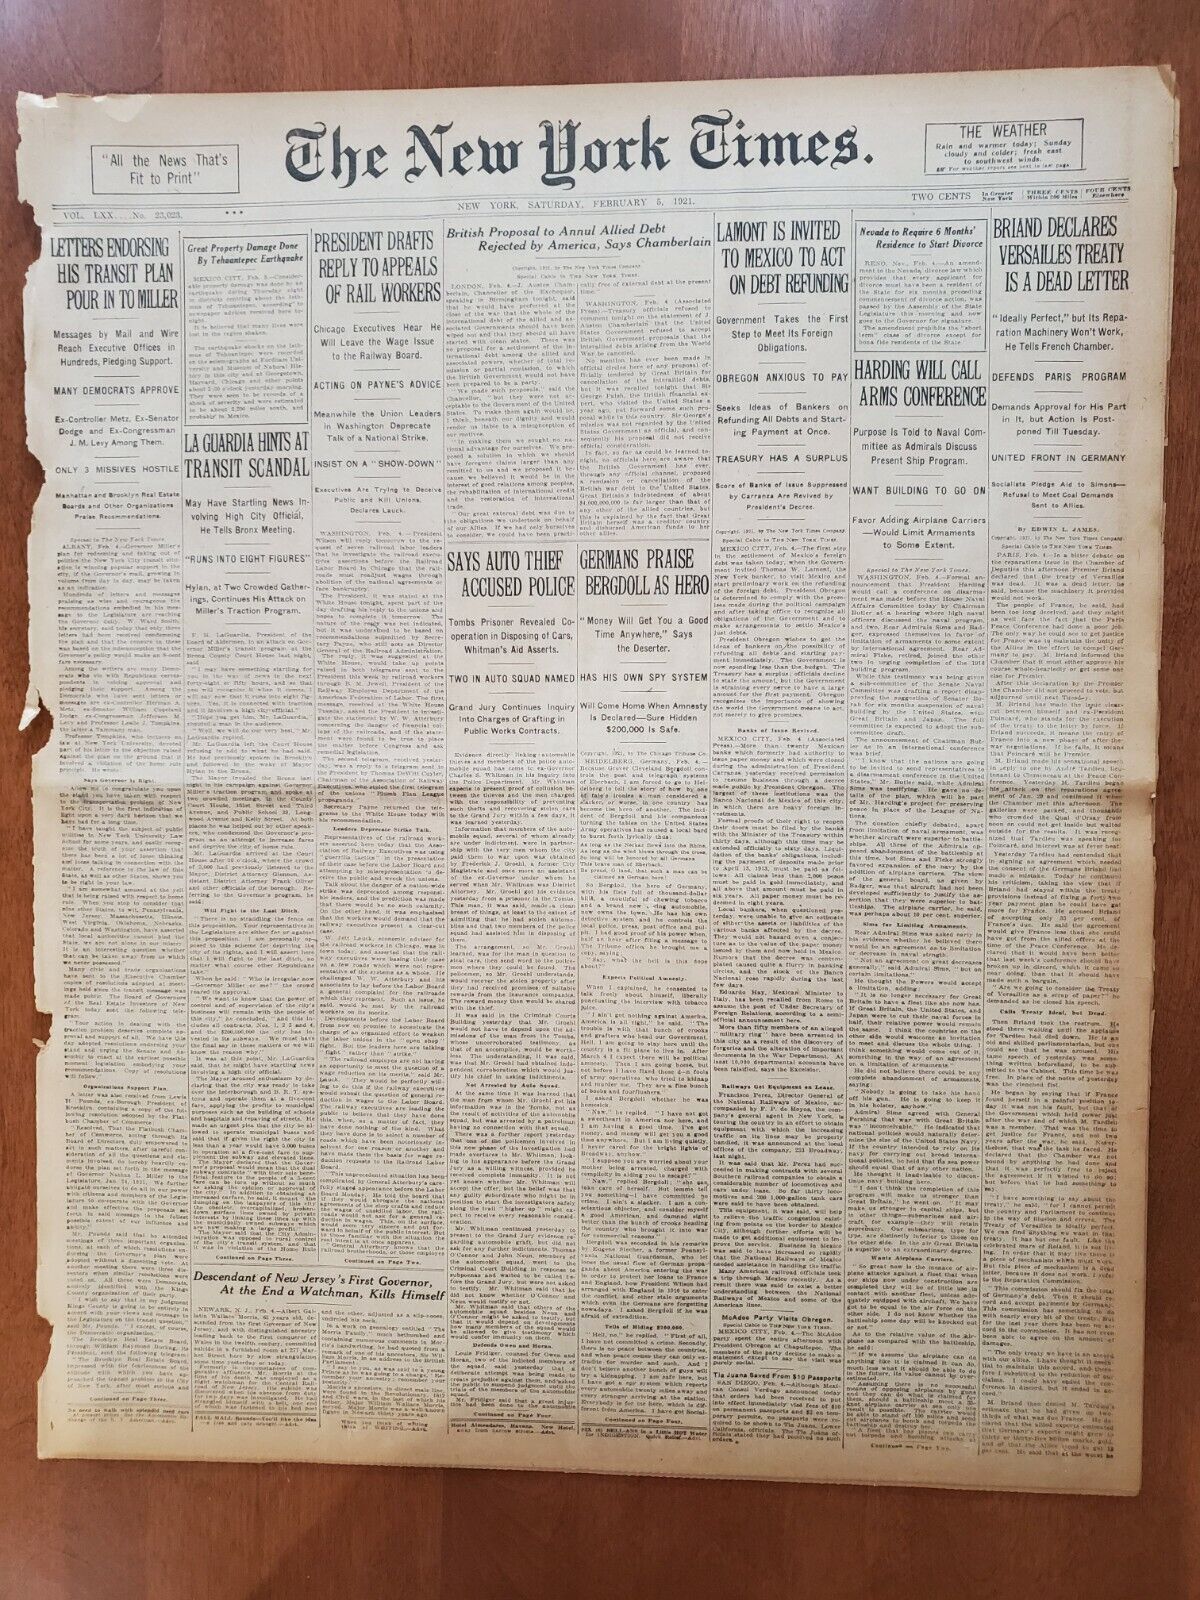 1921 FEBRUARY 5 NEW YORK TIMES - LAGUARDIA HINTS AT TRANSIT SCANDAL - NT 8114